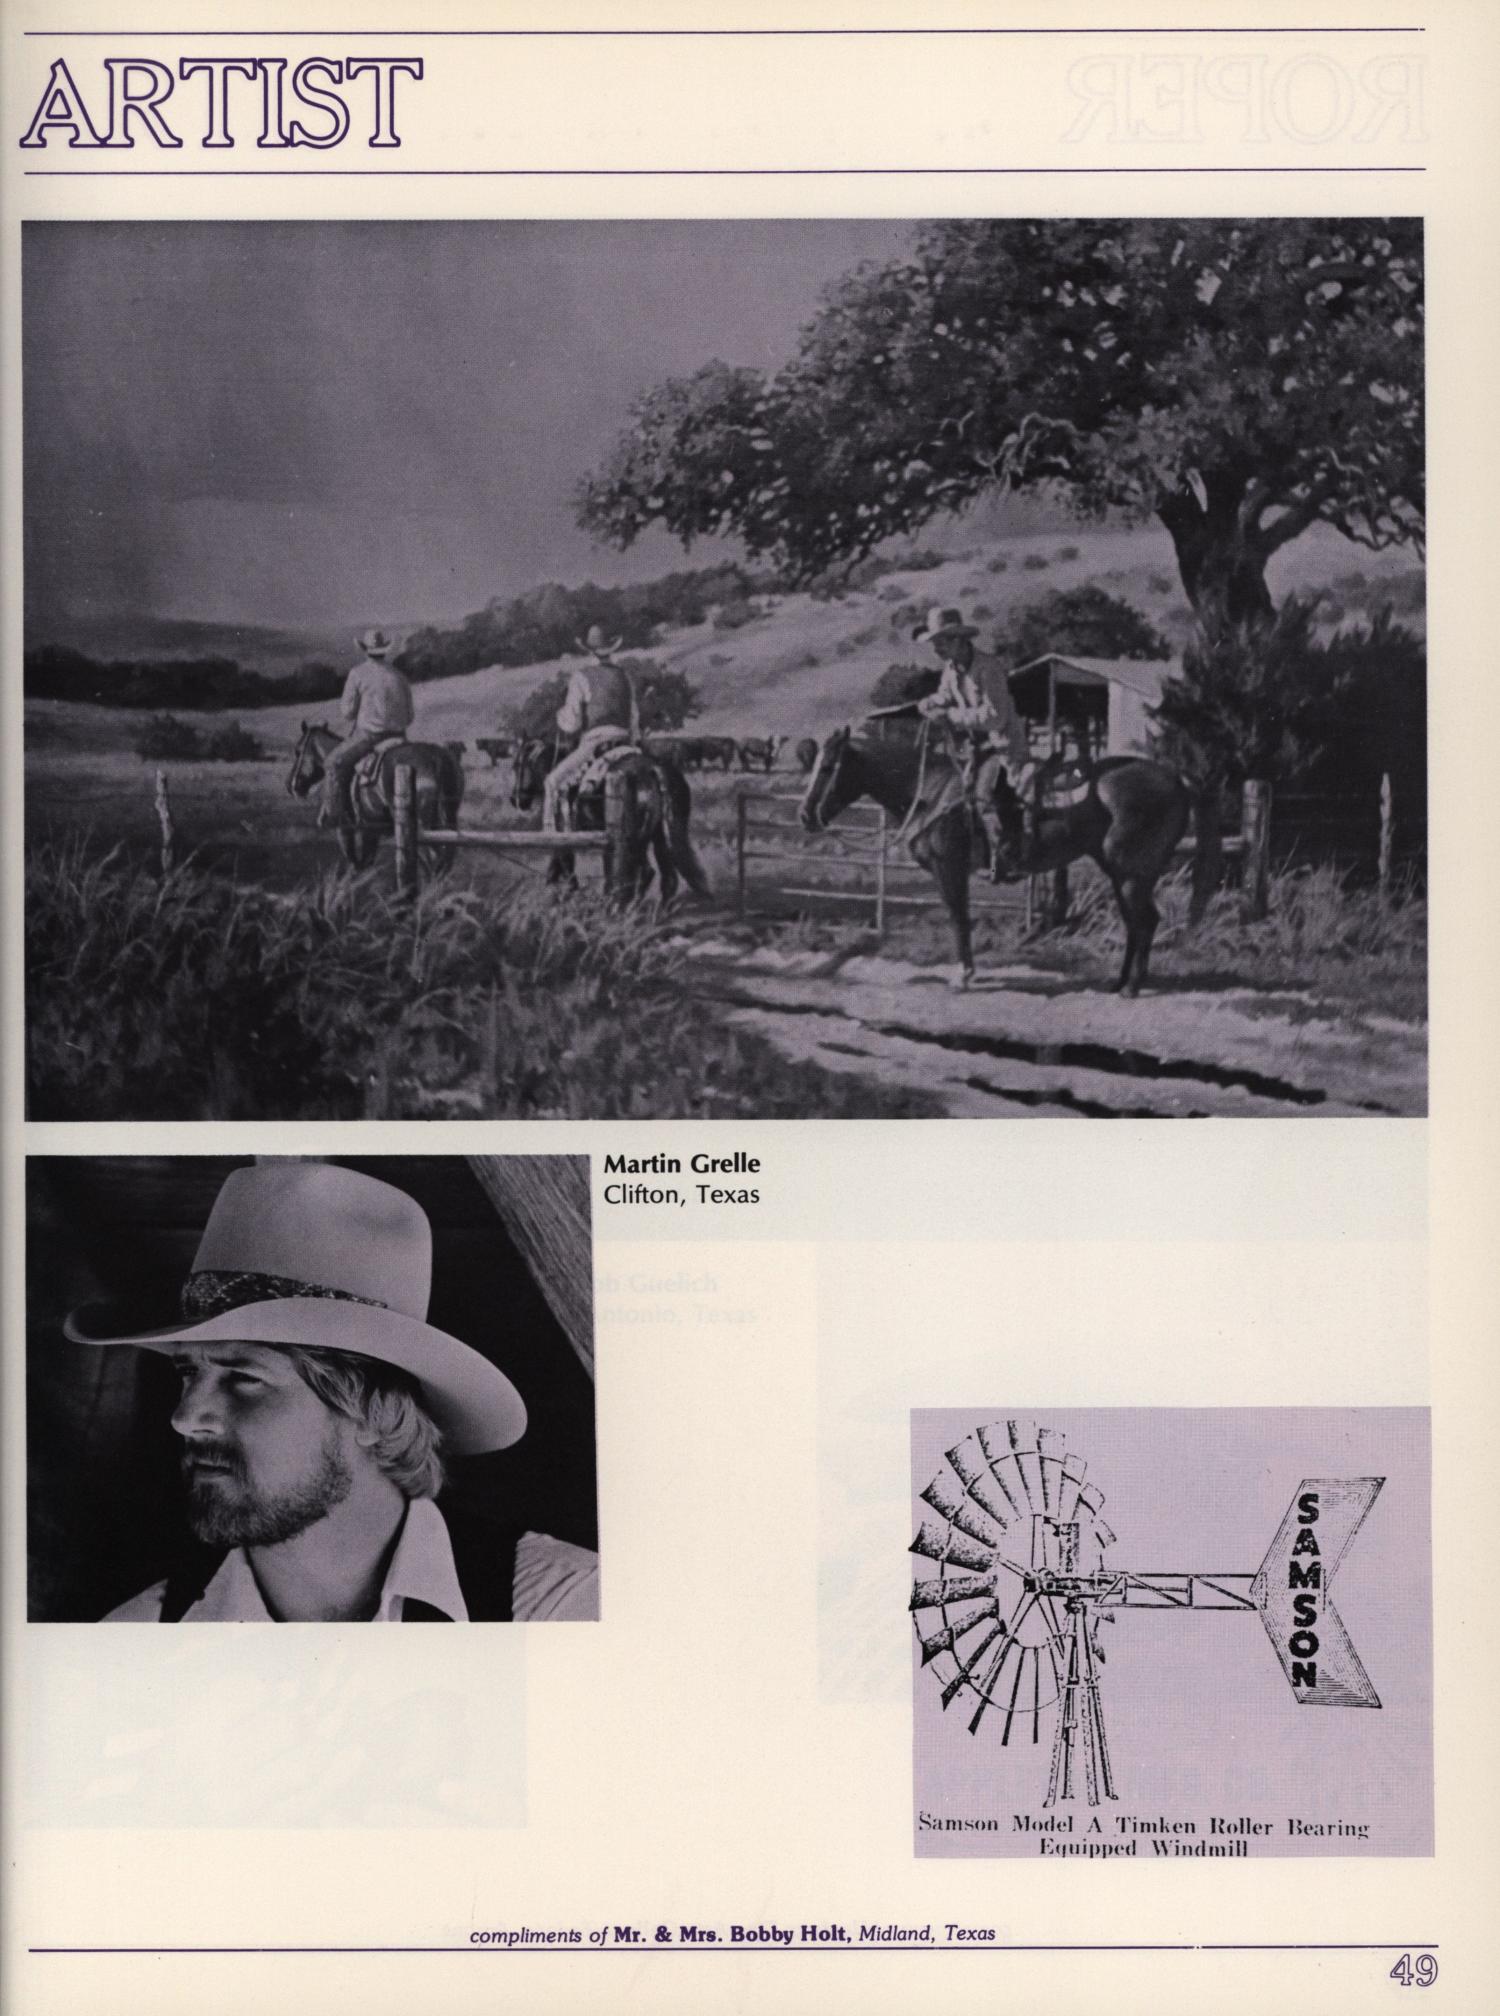 OS Ranch Steer Roping & Art Exhibit, October 2-4, 1982
                                                
                                                    49
                                                